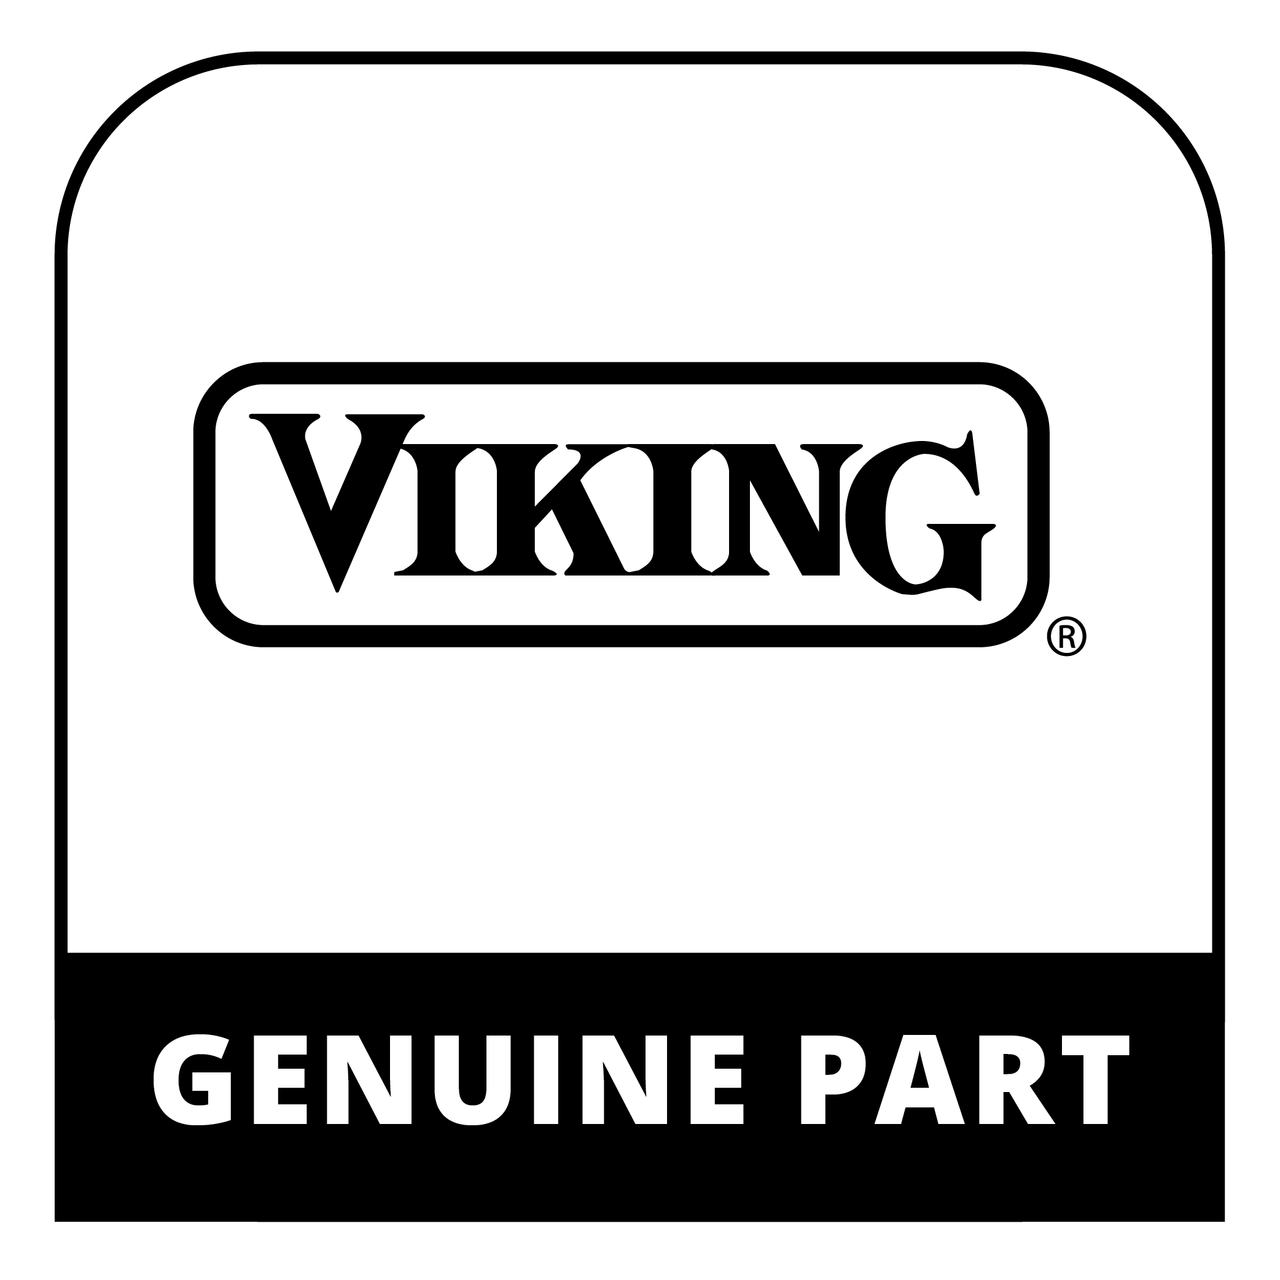 Viking 069588-006 - Brkt, Extnd, Shlf, Hng Side, Lh, Ar Column 7 Series - Genuine Viking Part